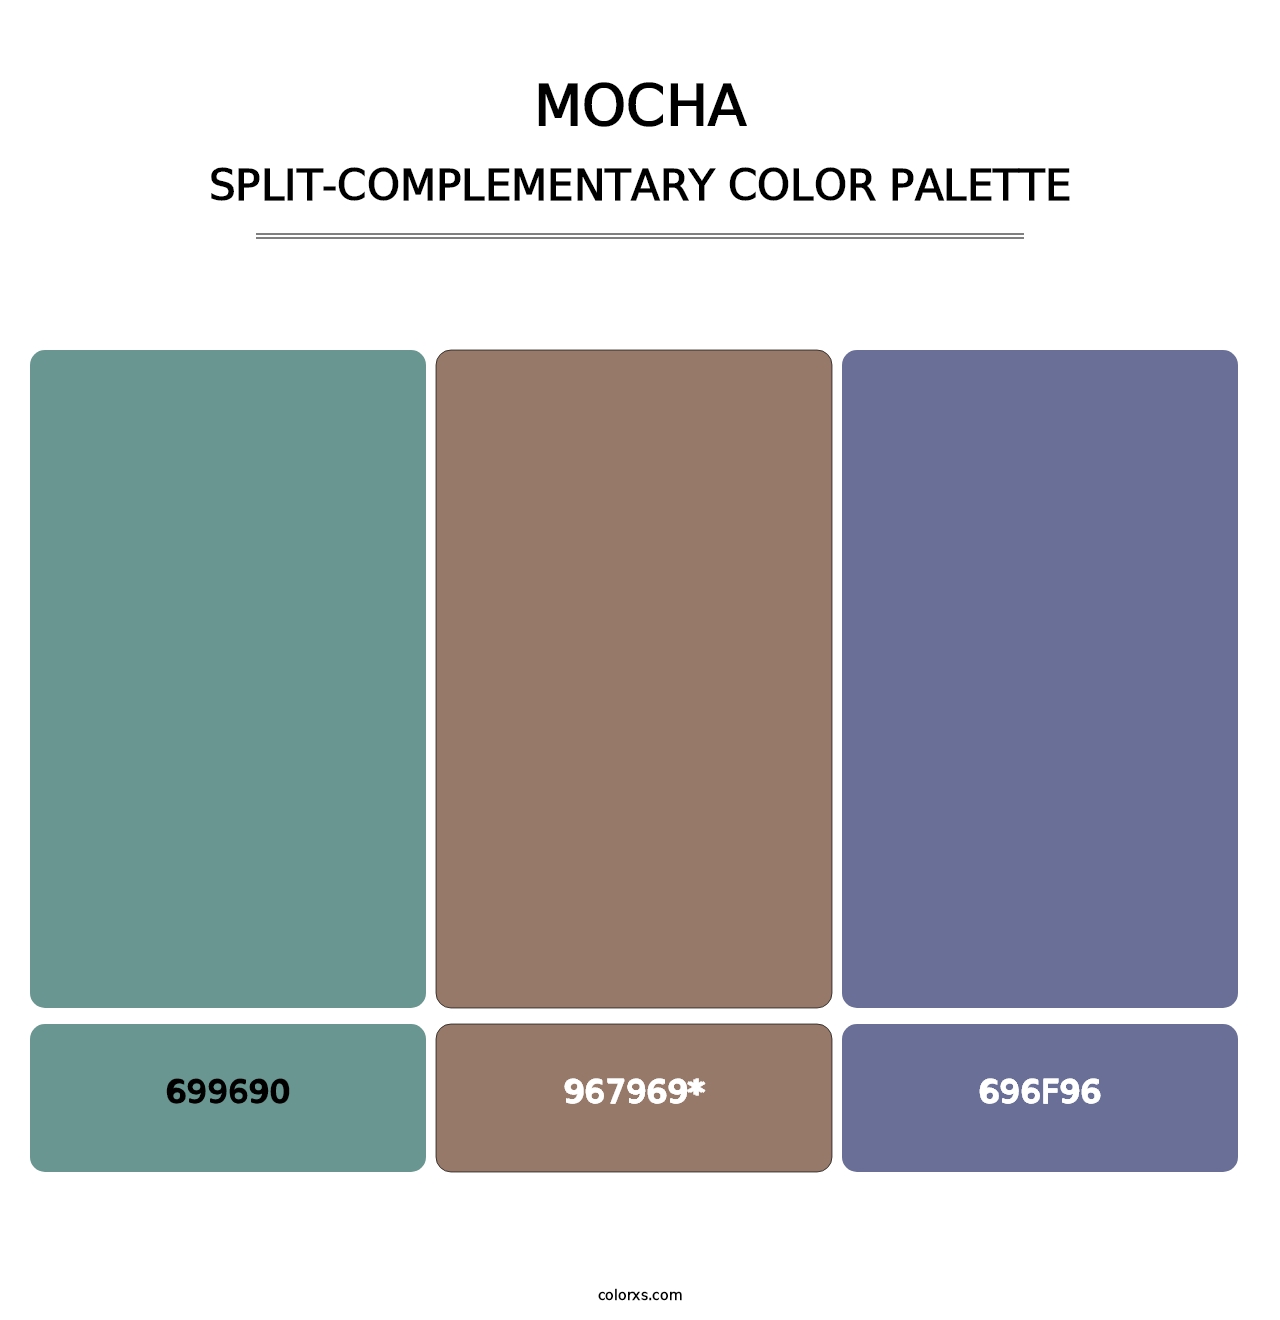 Mocha - Split-Complementary Color Palette